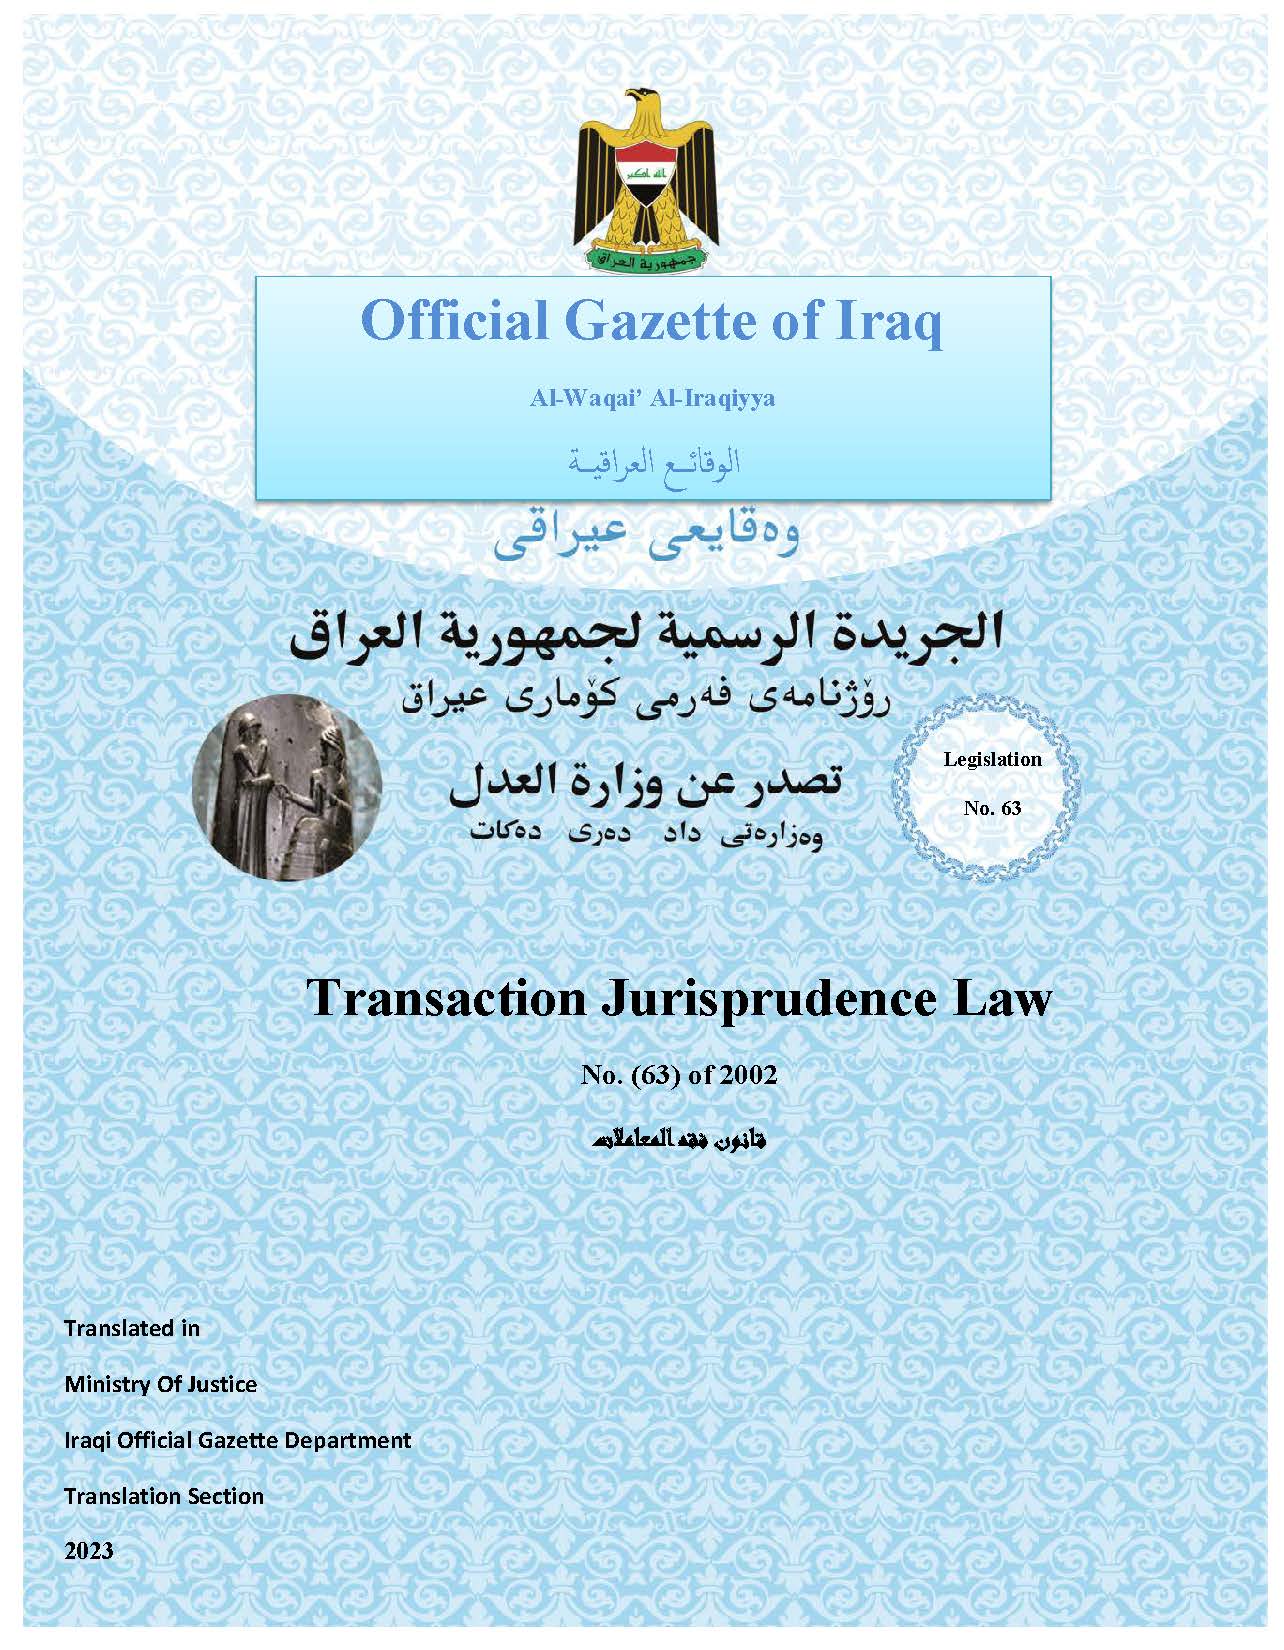 Transaction Jurisprudece Law No.(63) of 2002 